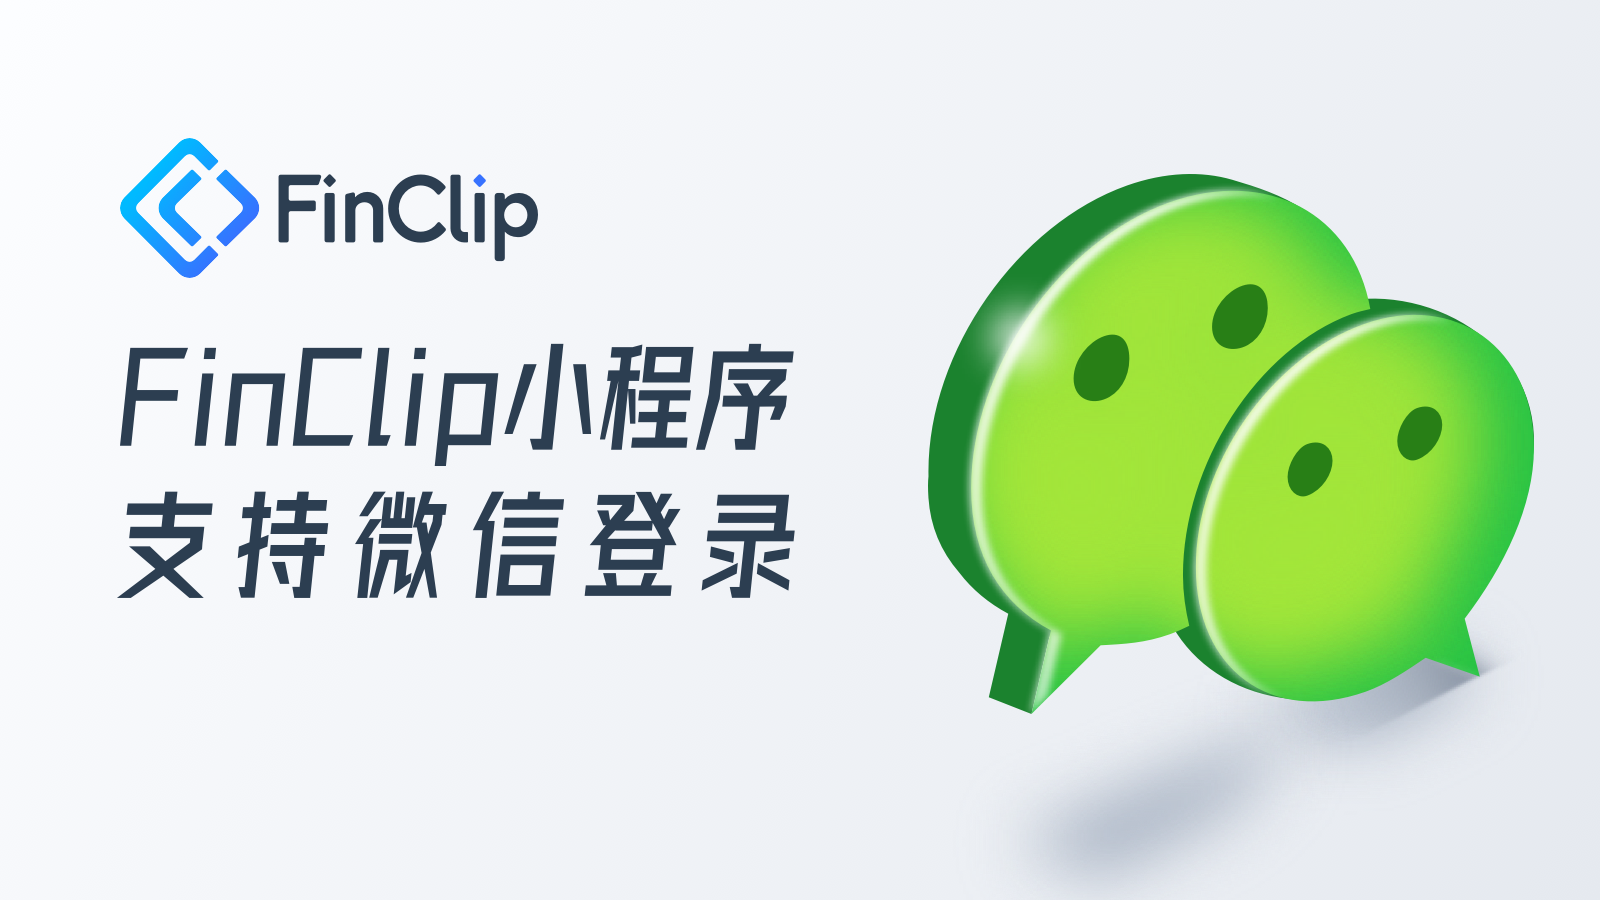 FinClip 小程序支持微信登录